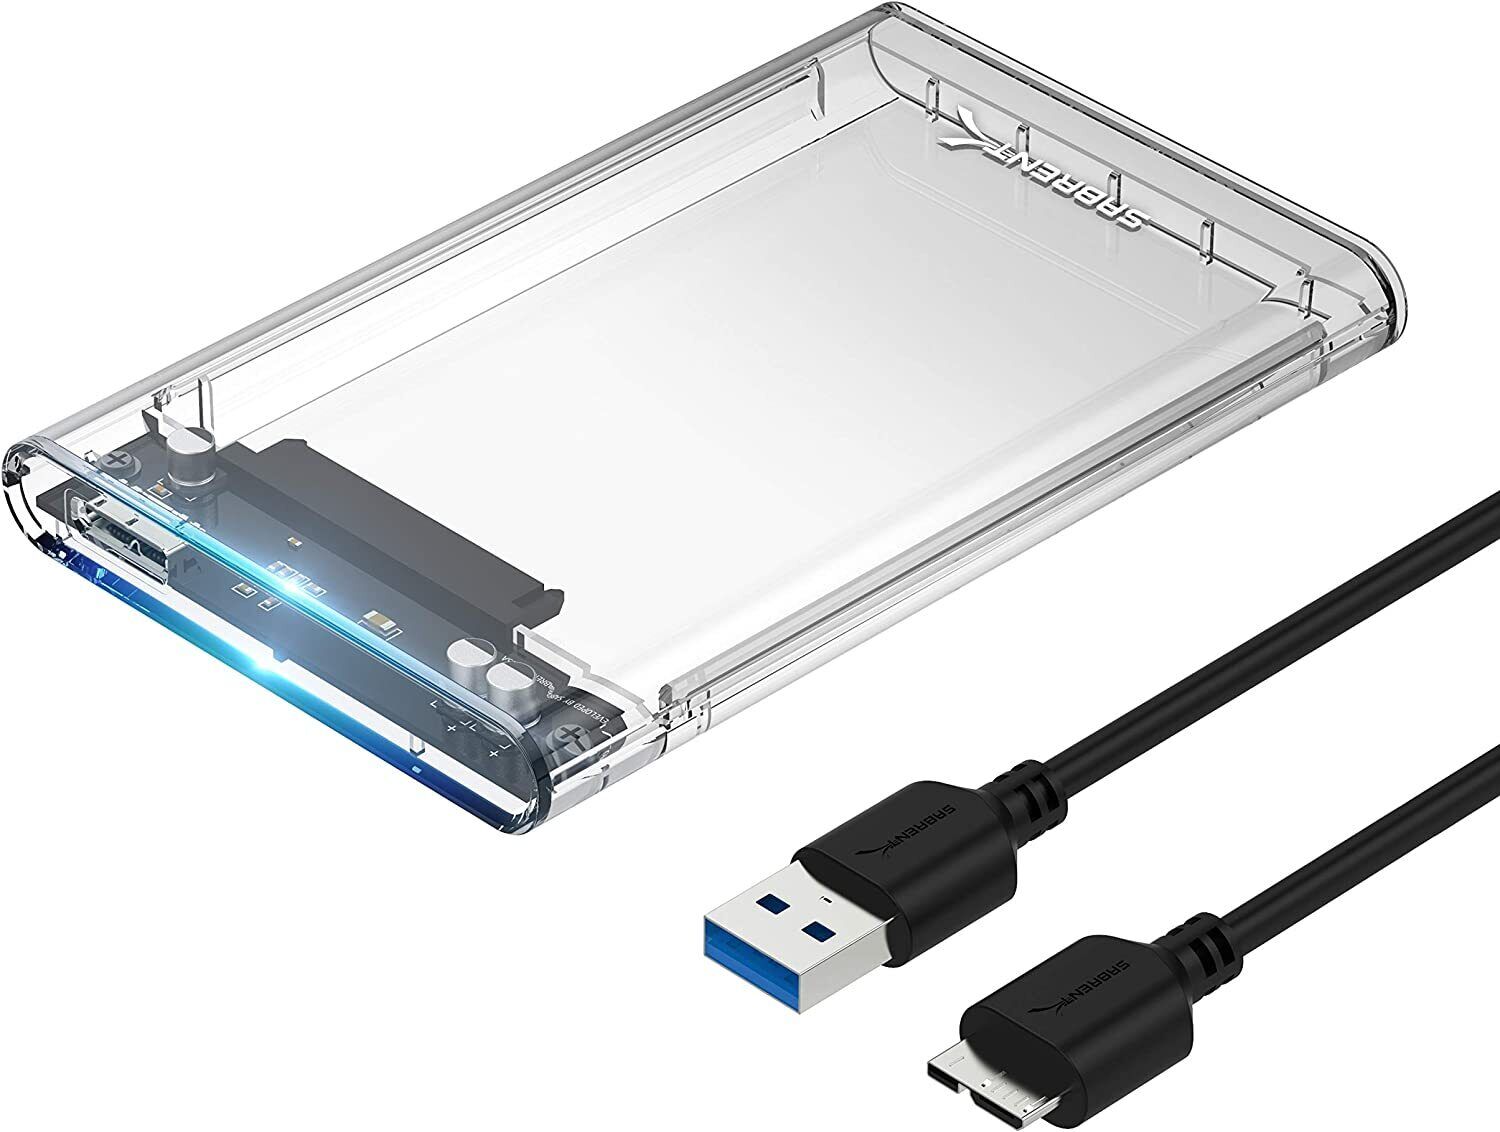 Sabrent 2.5-Inch SATA to USB 3.0 Tool-free Hard Drive Enclosure (EC-OCUB)